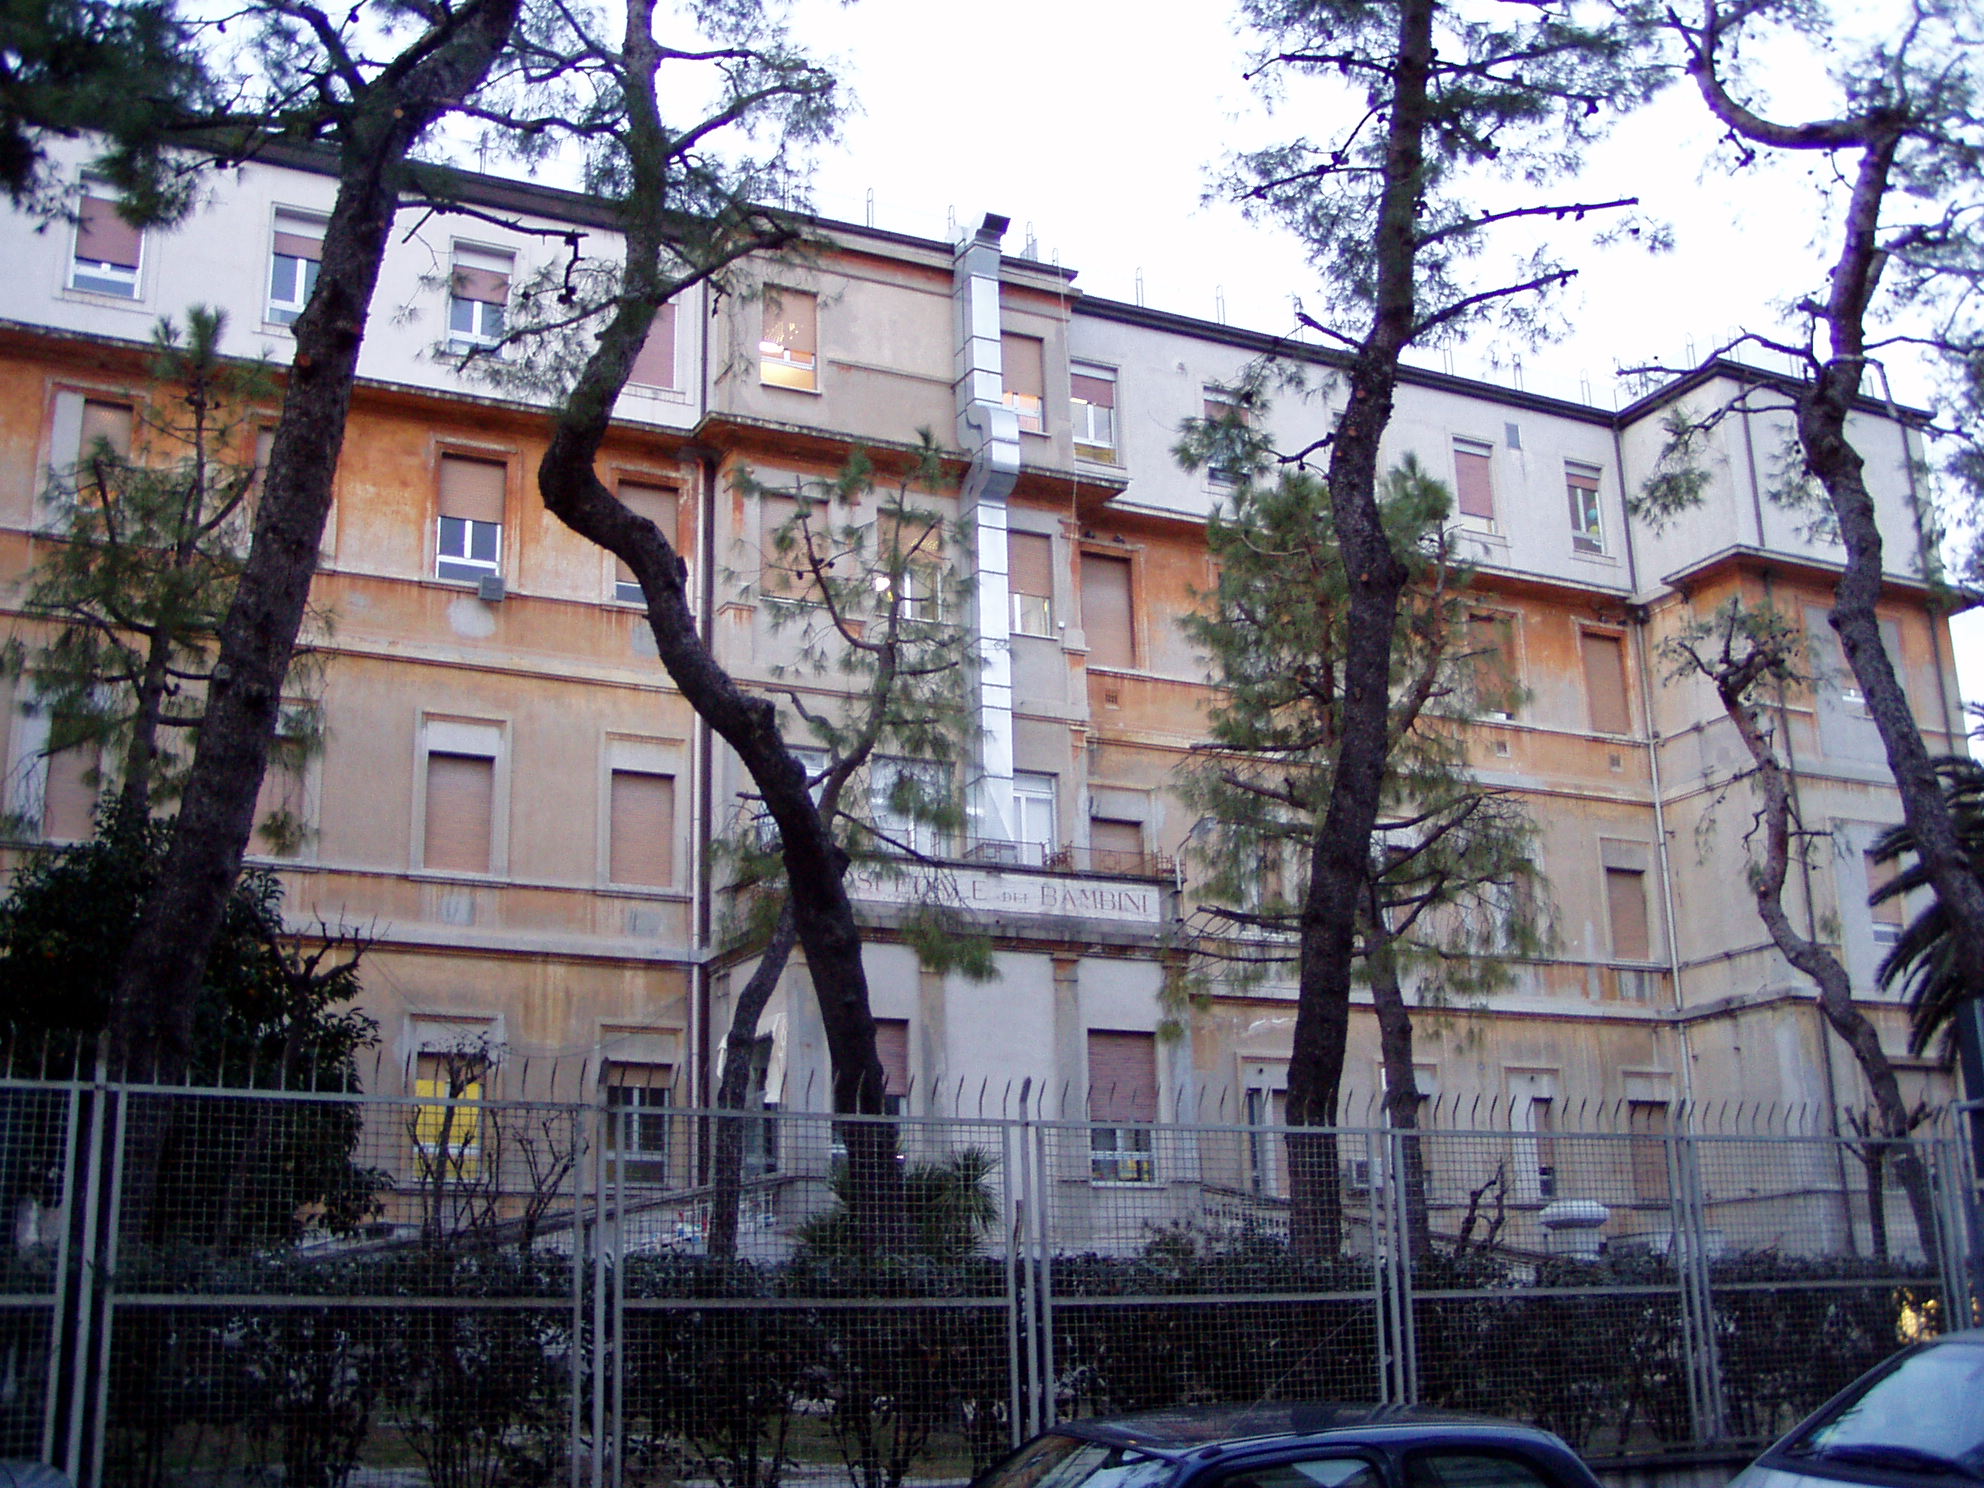 Ospedale dei Bambini "G. Salesi" (ospedale, dei bambini) - Ancona (AN) 